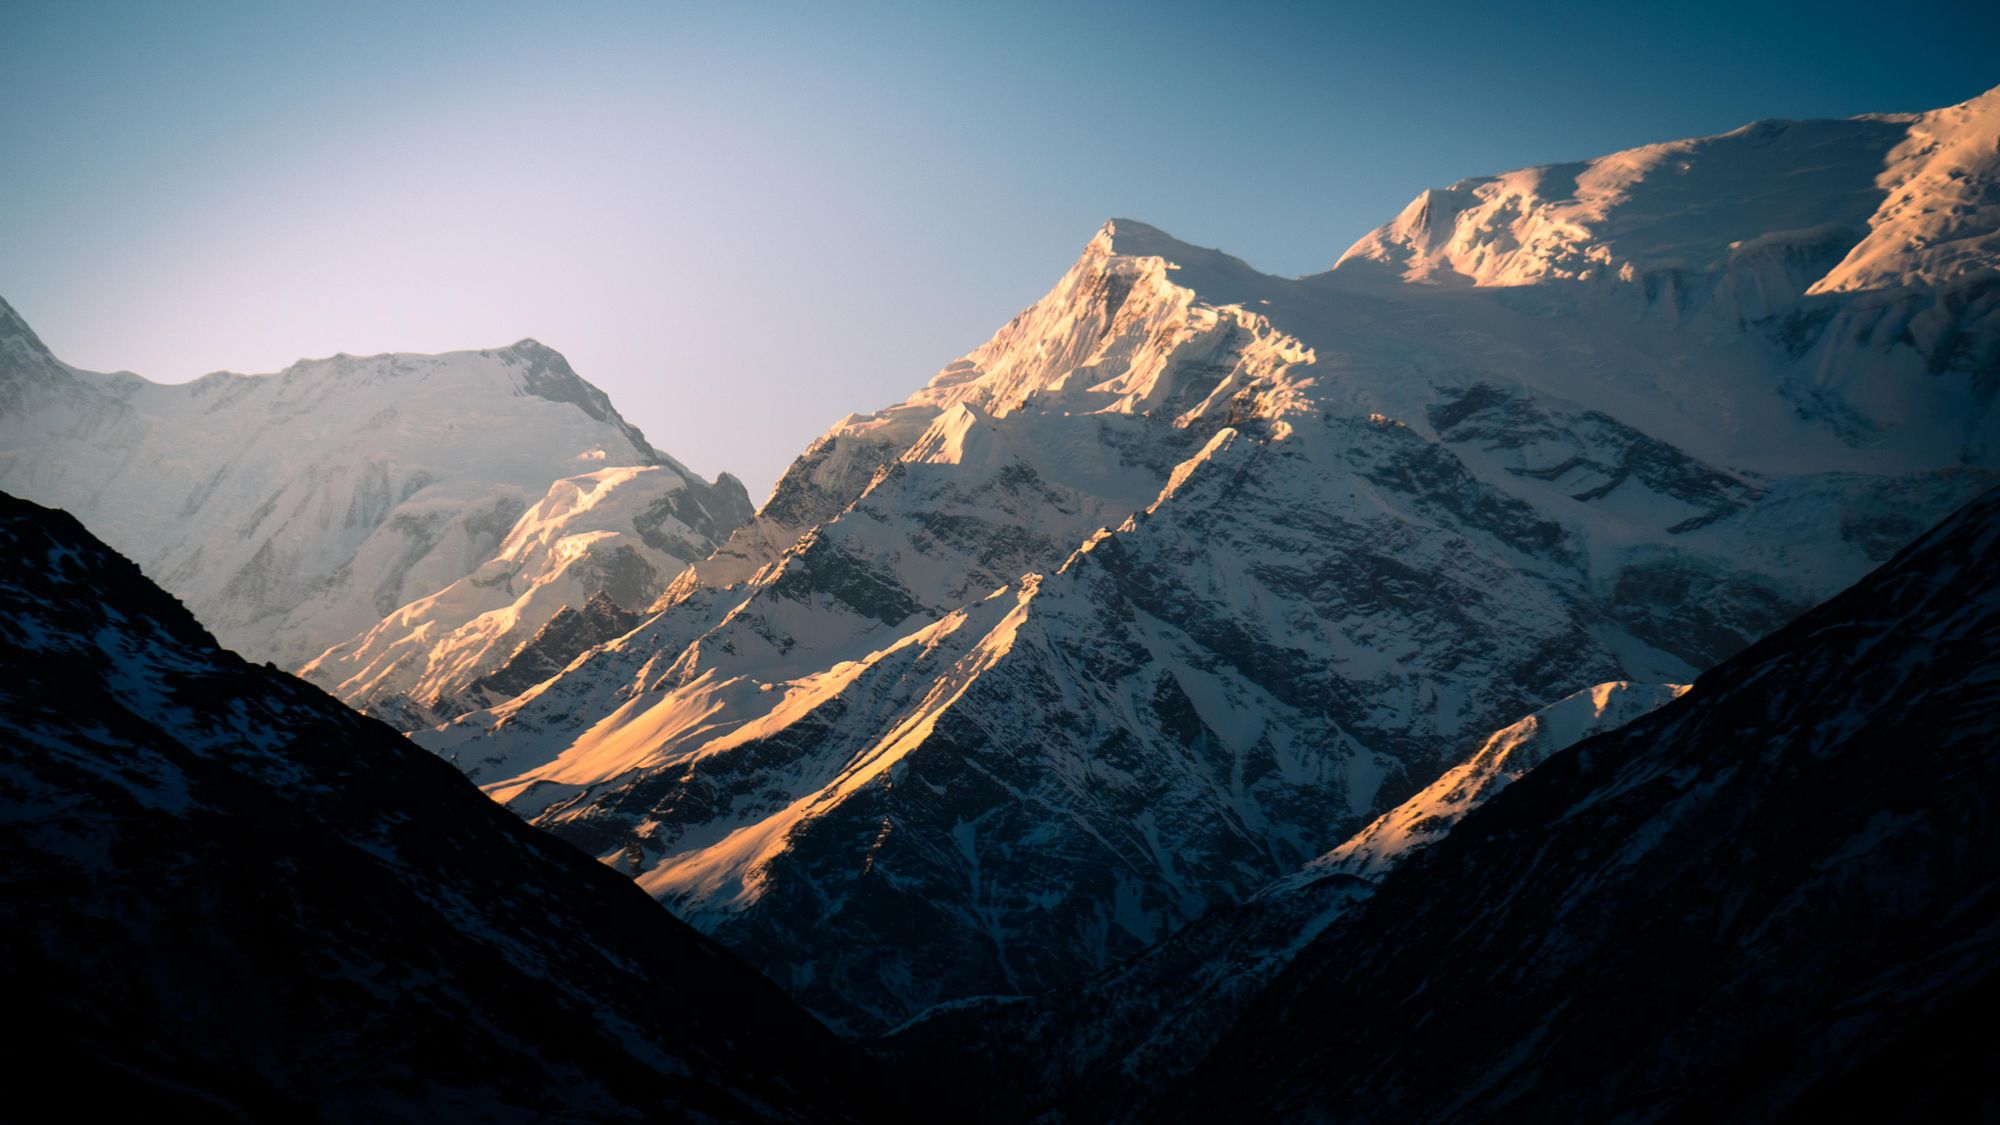 A view of the Annapurna Massif as it nears 8,000m. Photo: Josh Edwards